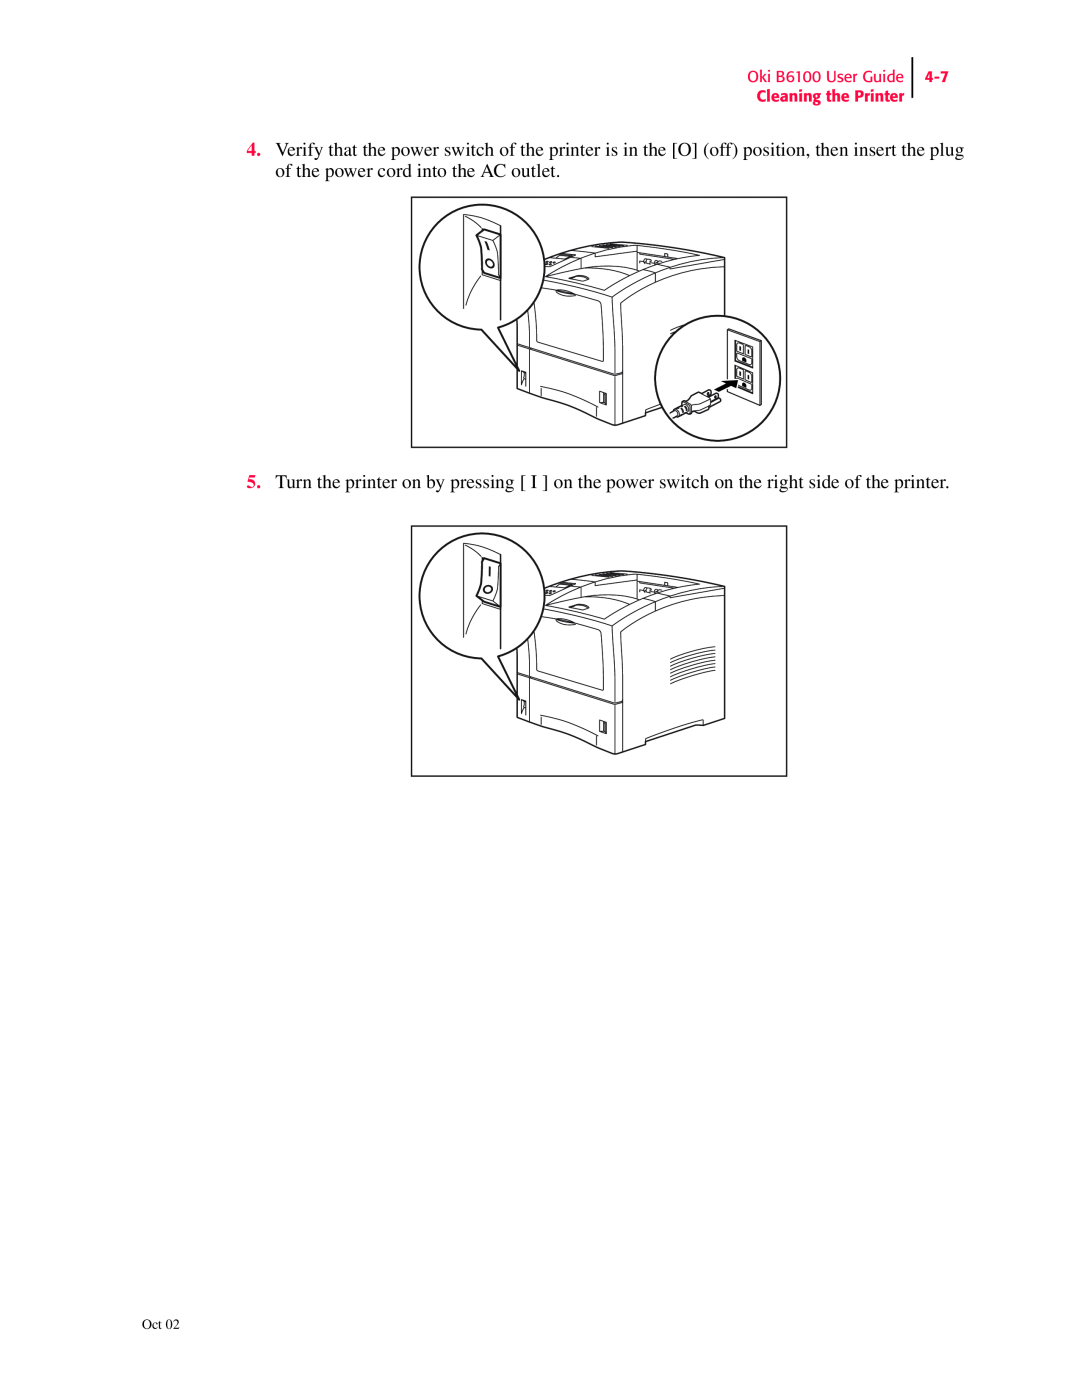 Oki manual Oki B6100 User Guide Cleaning the Printer 